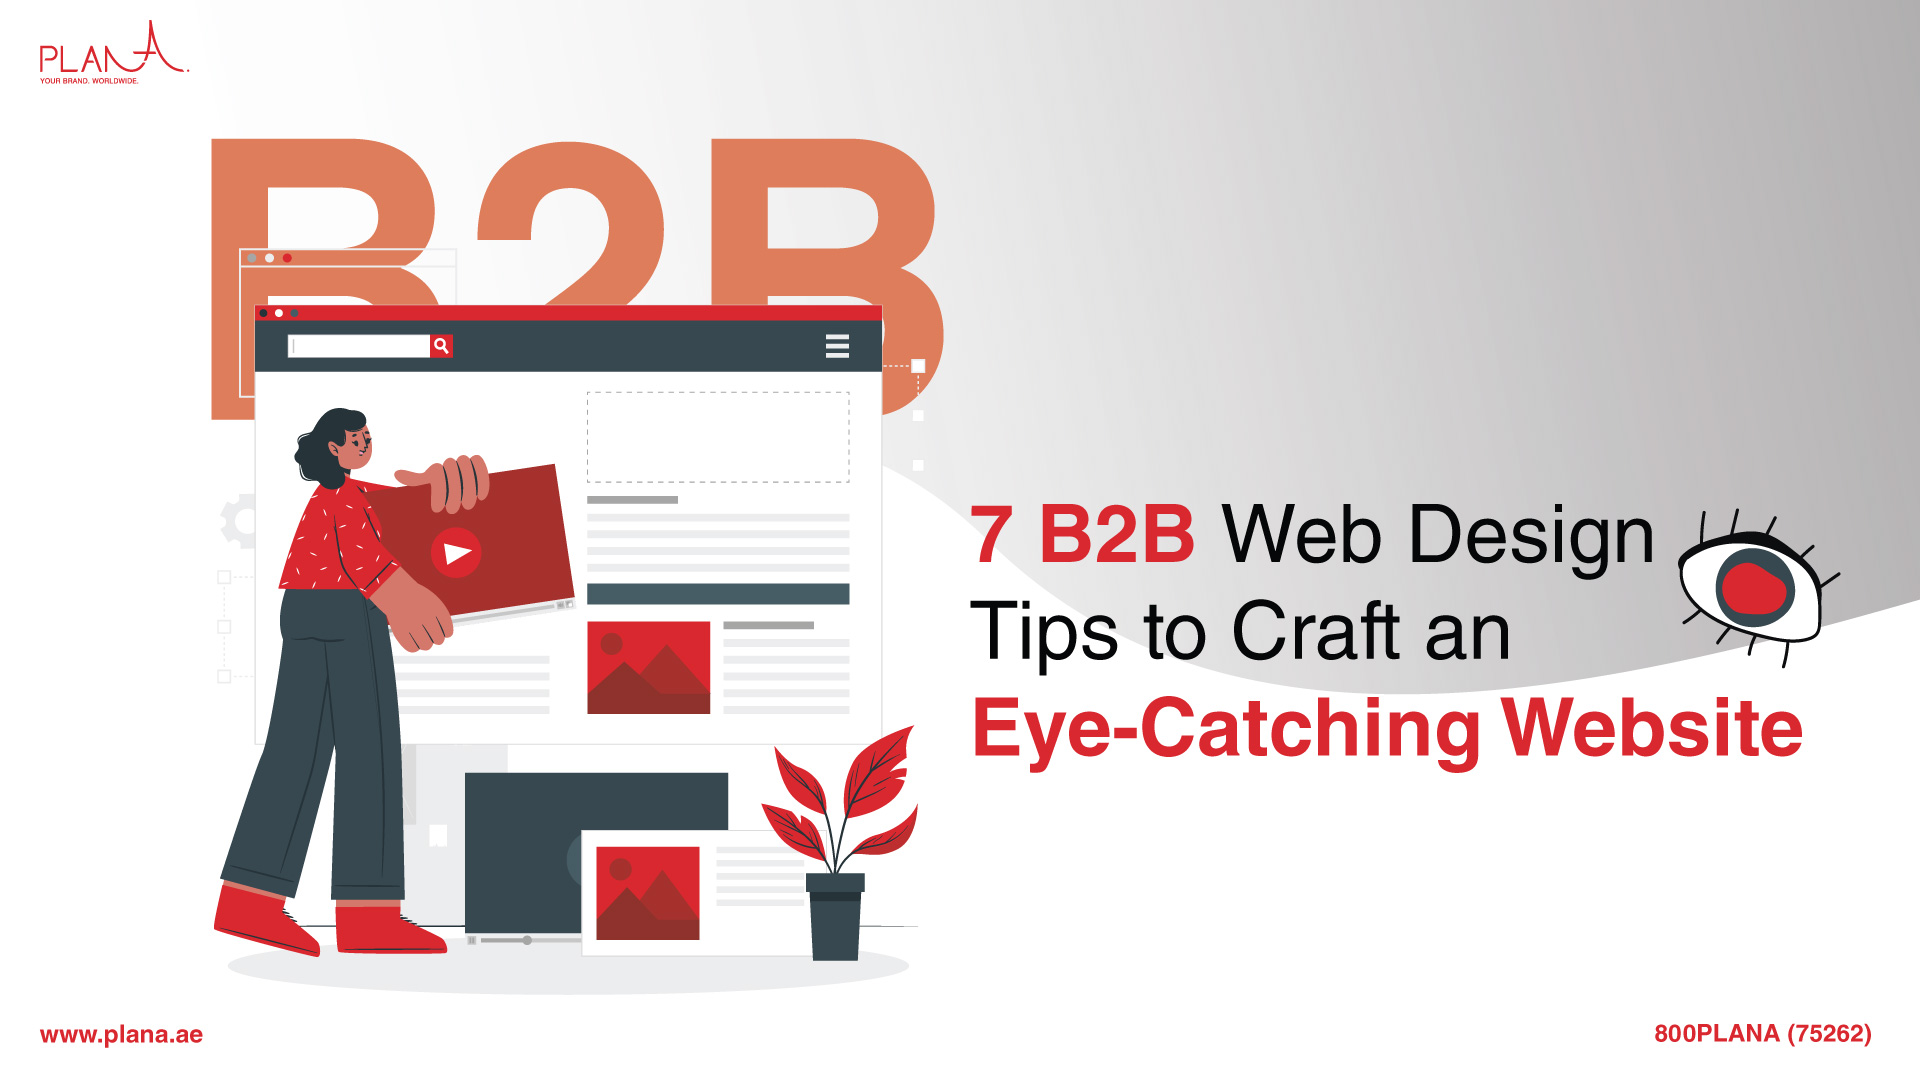 7 B2B Web Design Tips to Craft an Eye-Catching Website